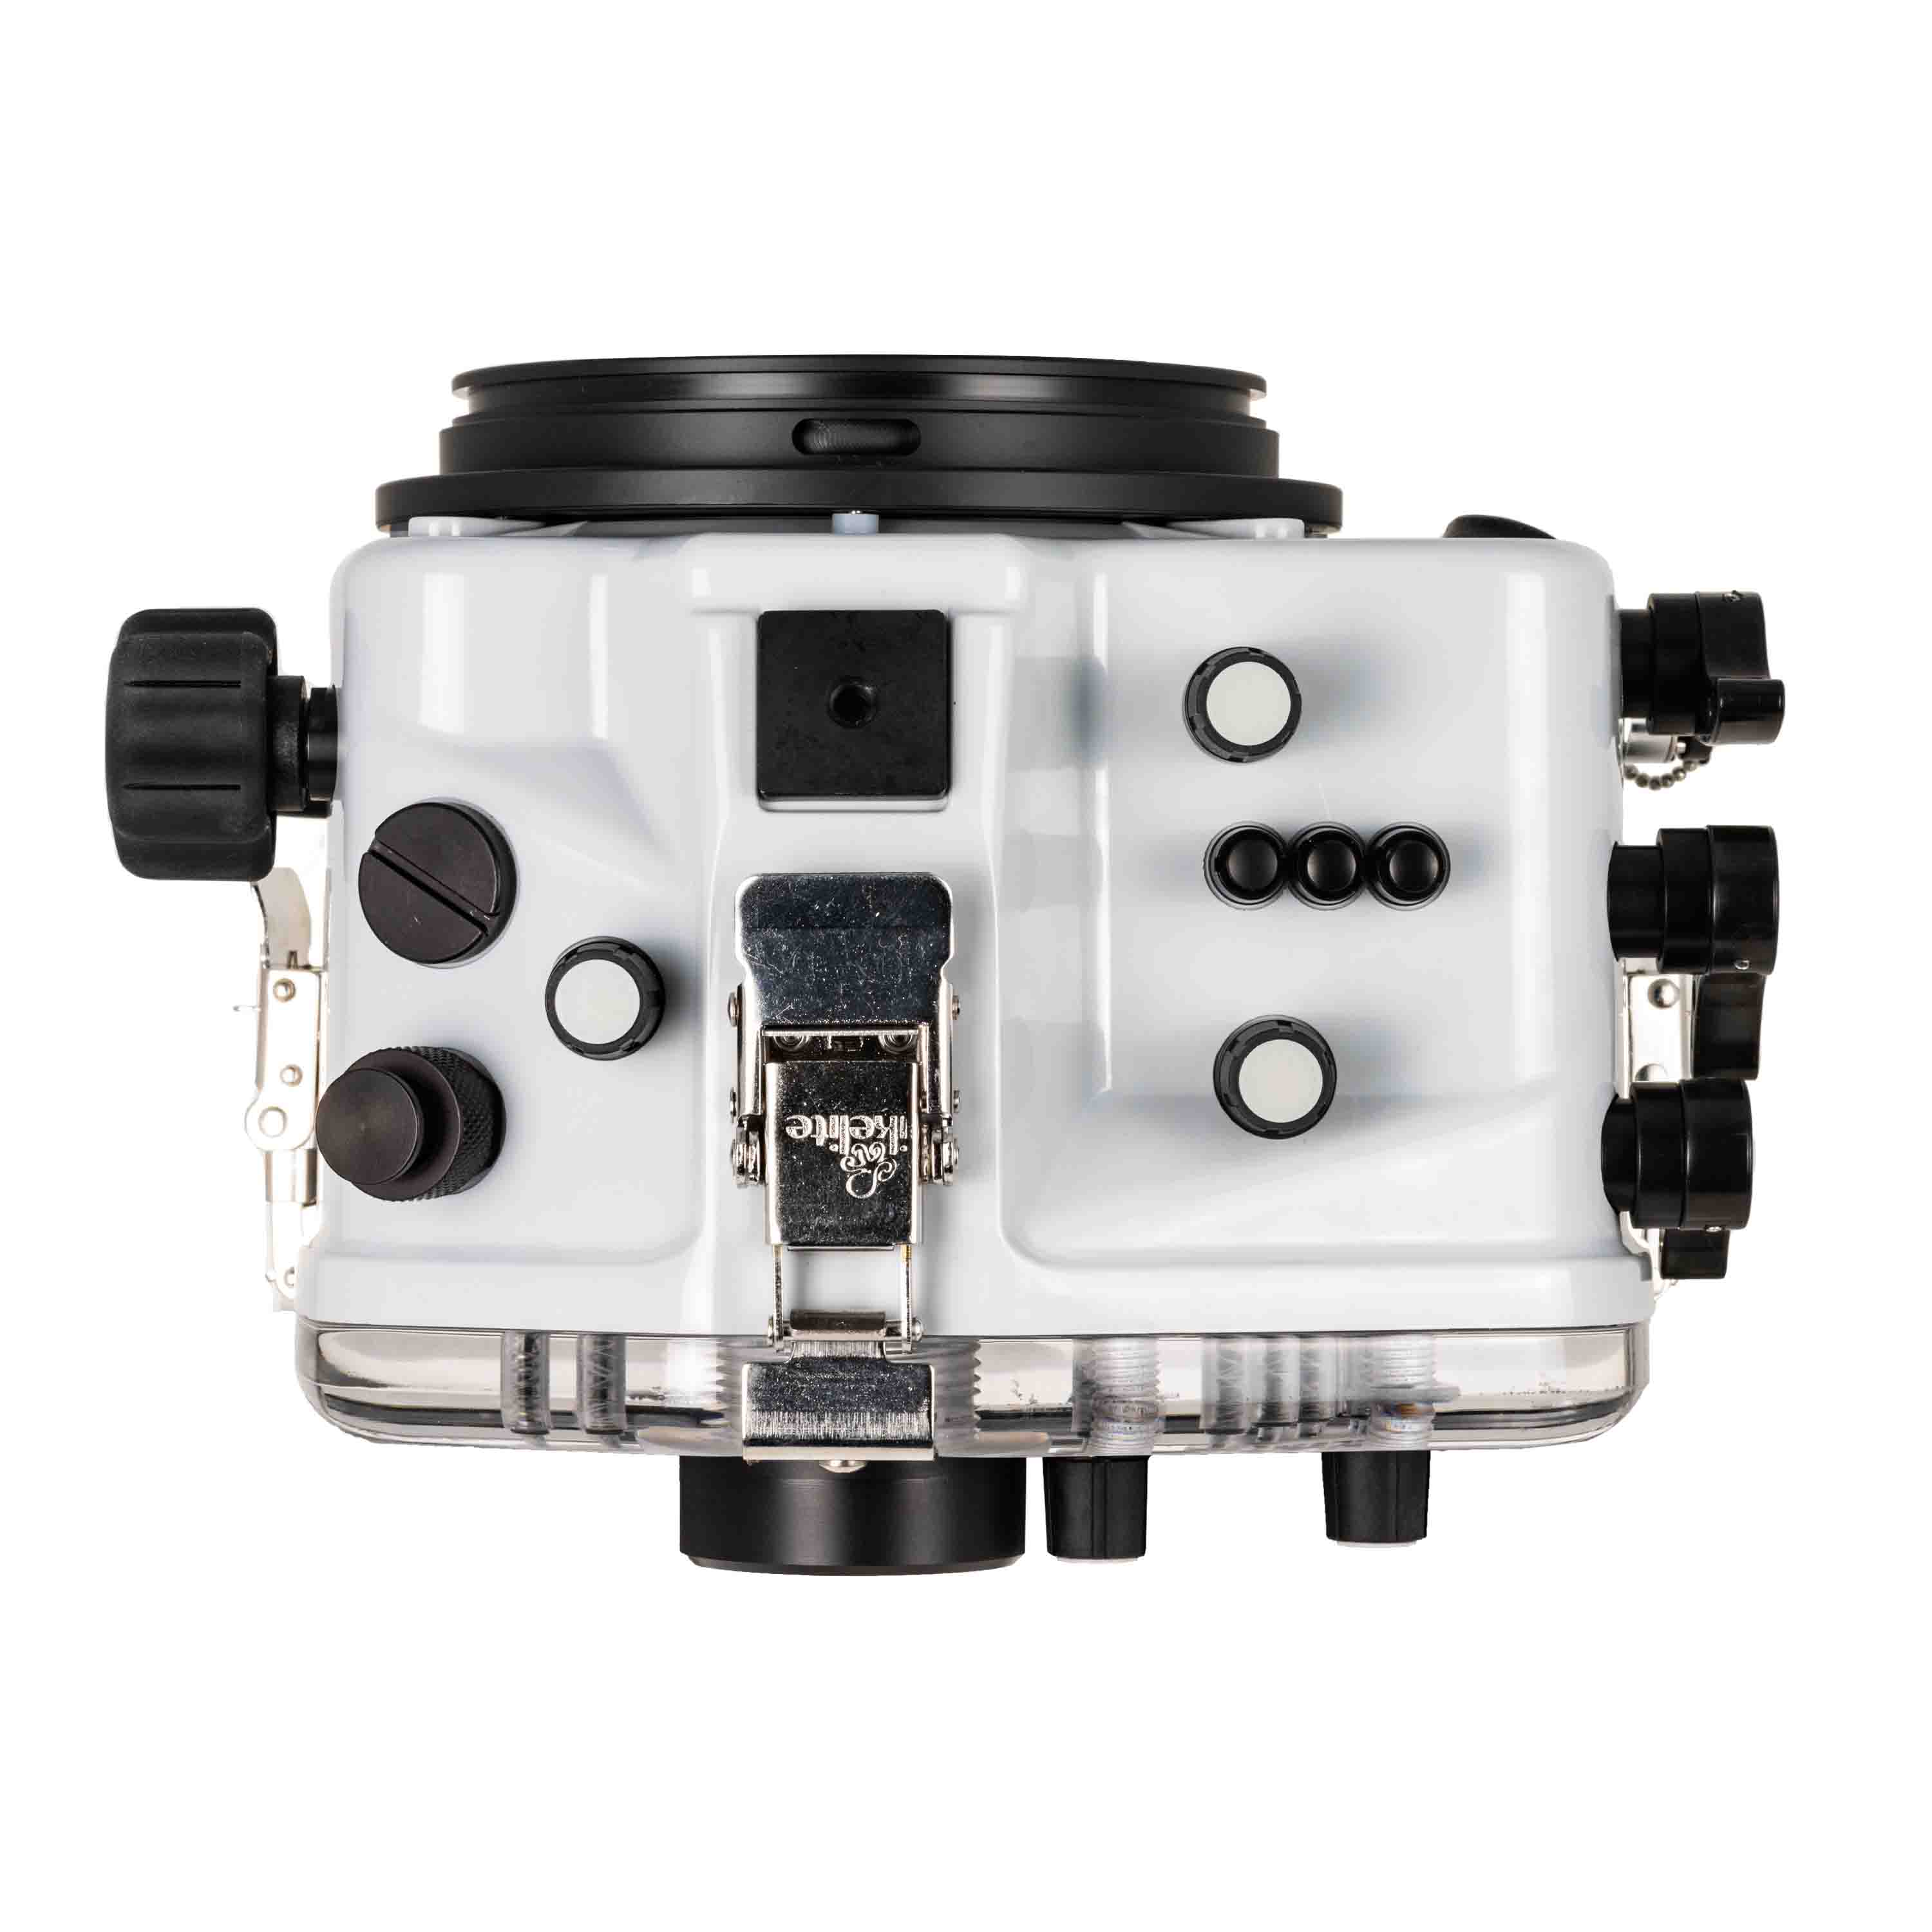 Panasonic LUMIX S5 II Mirrorless Digital Camera Body with Accessories Kit 